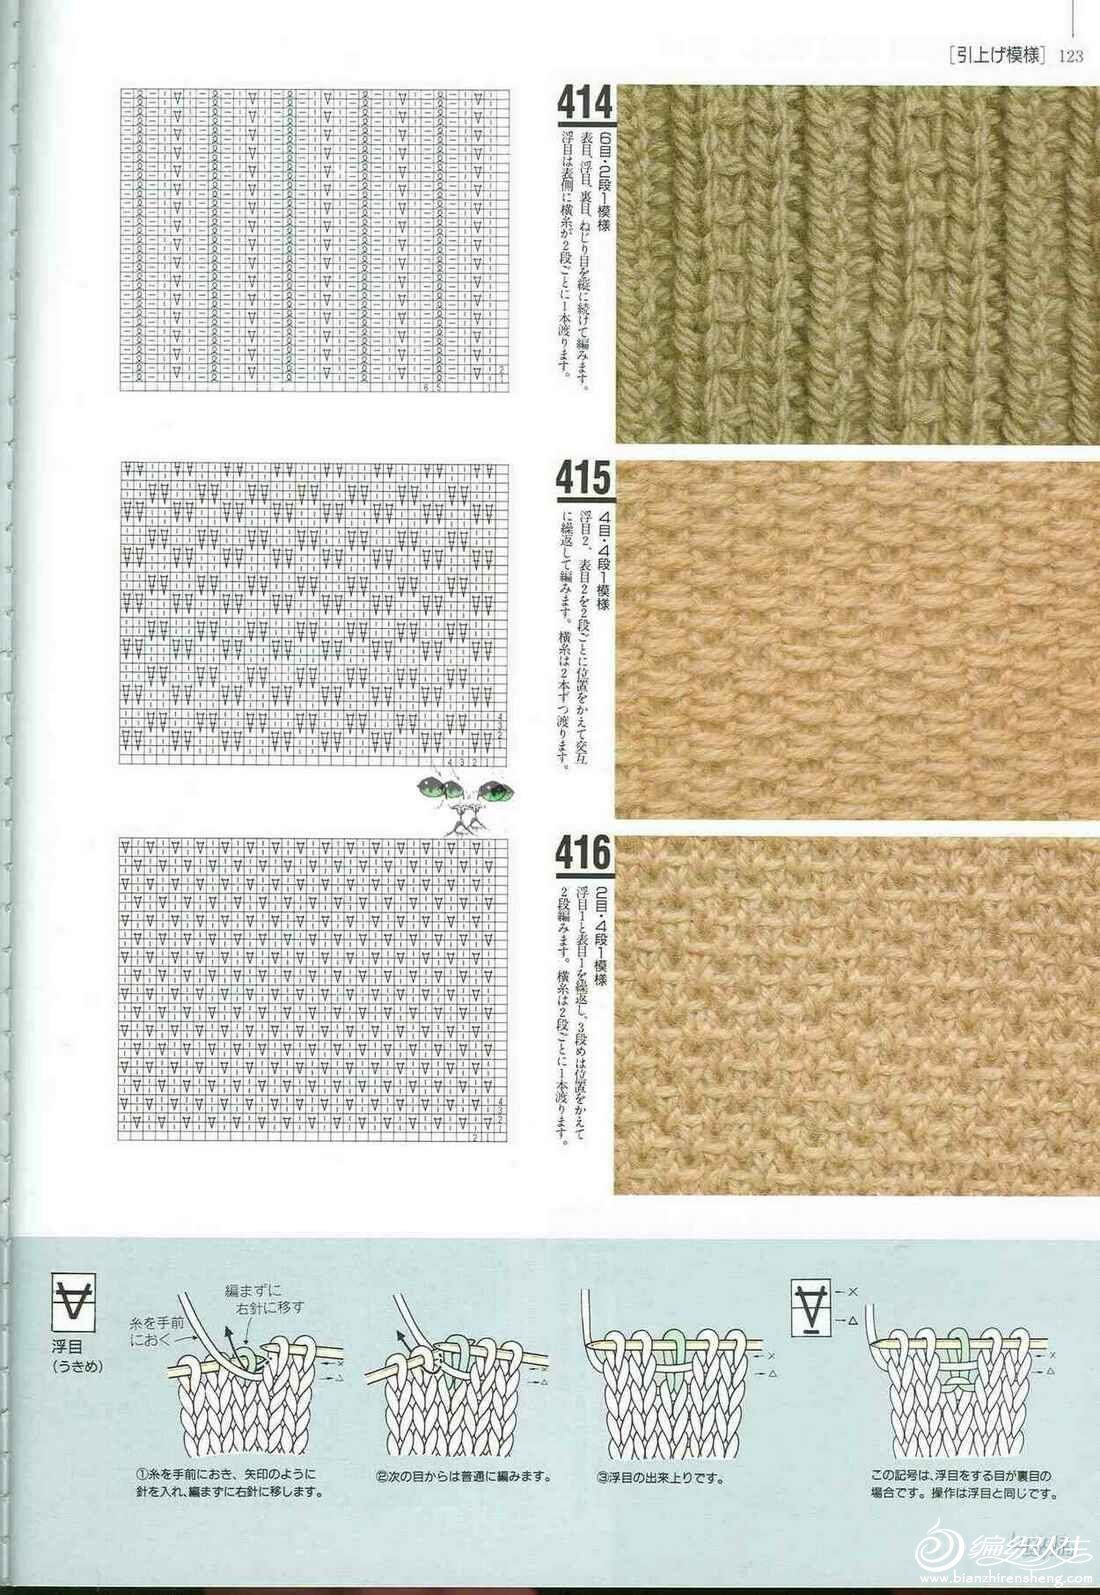 Knitting Patterns 500 120.jpg